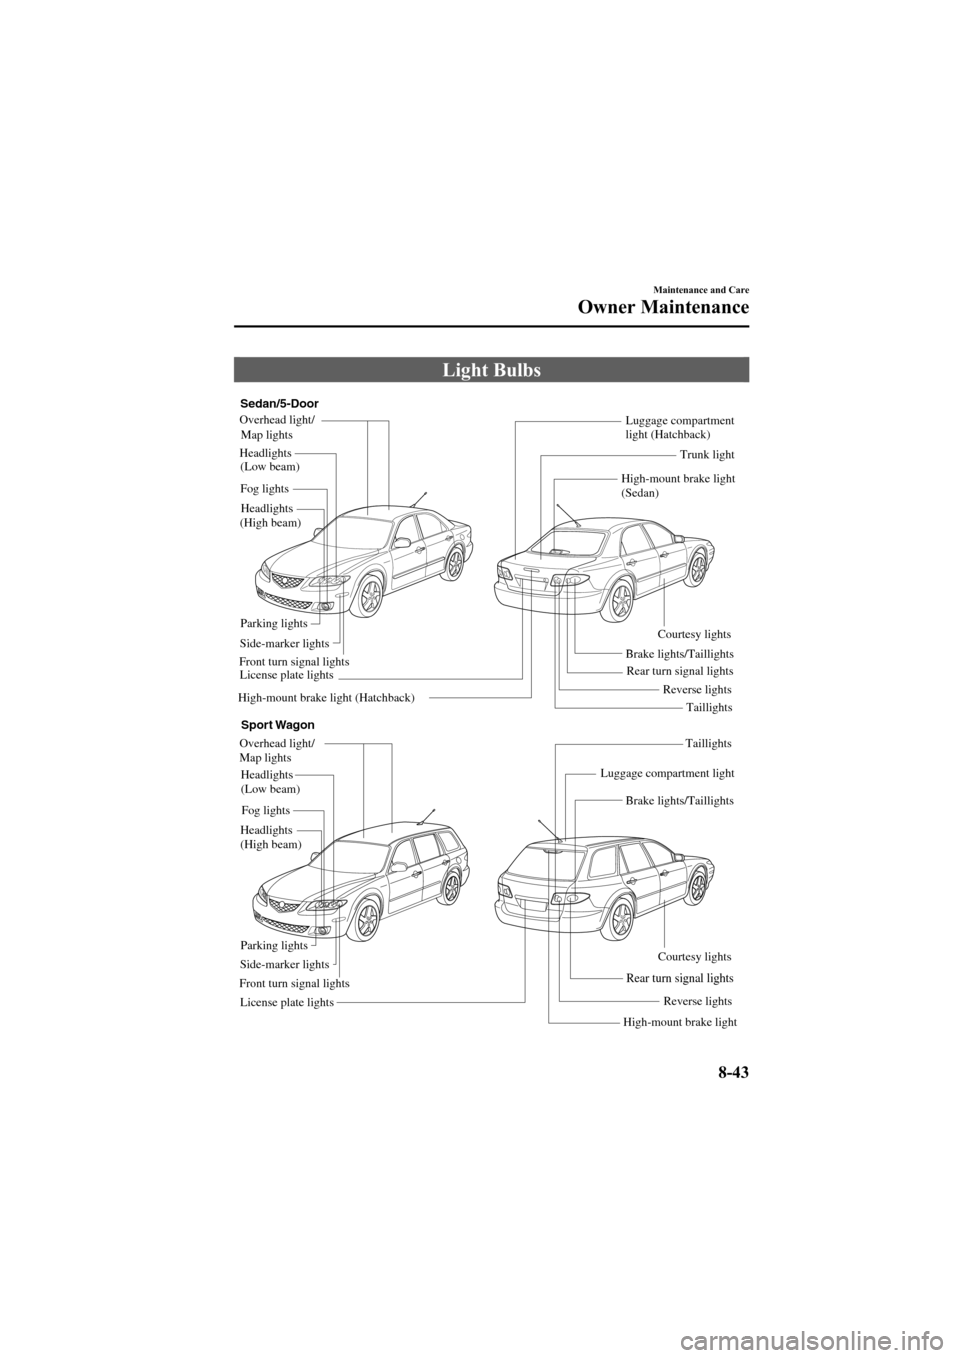 MAZDA MODEL 6 2006  Owners Manual (in English) Black plate (309,1)
Light Bulbs
Luggage compartment 
light (Hatchback)
High-mount brake light 
(Sedan)
Headlights
(High beam)Headlights
(Low beam) Overhead light/ 
Map lights
Luggage compartment light